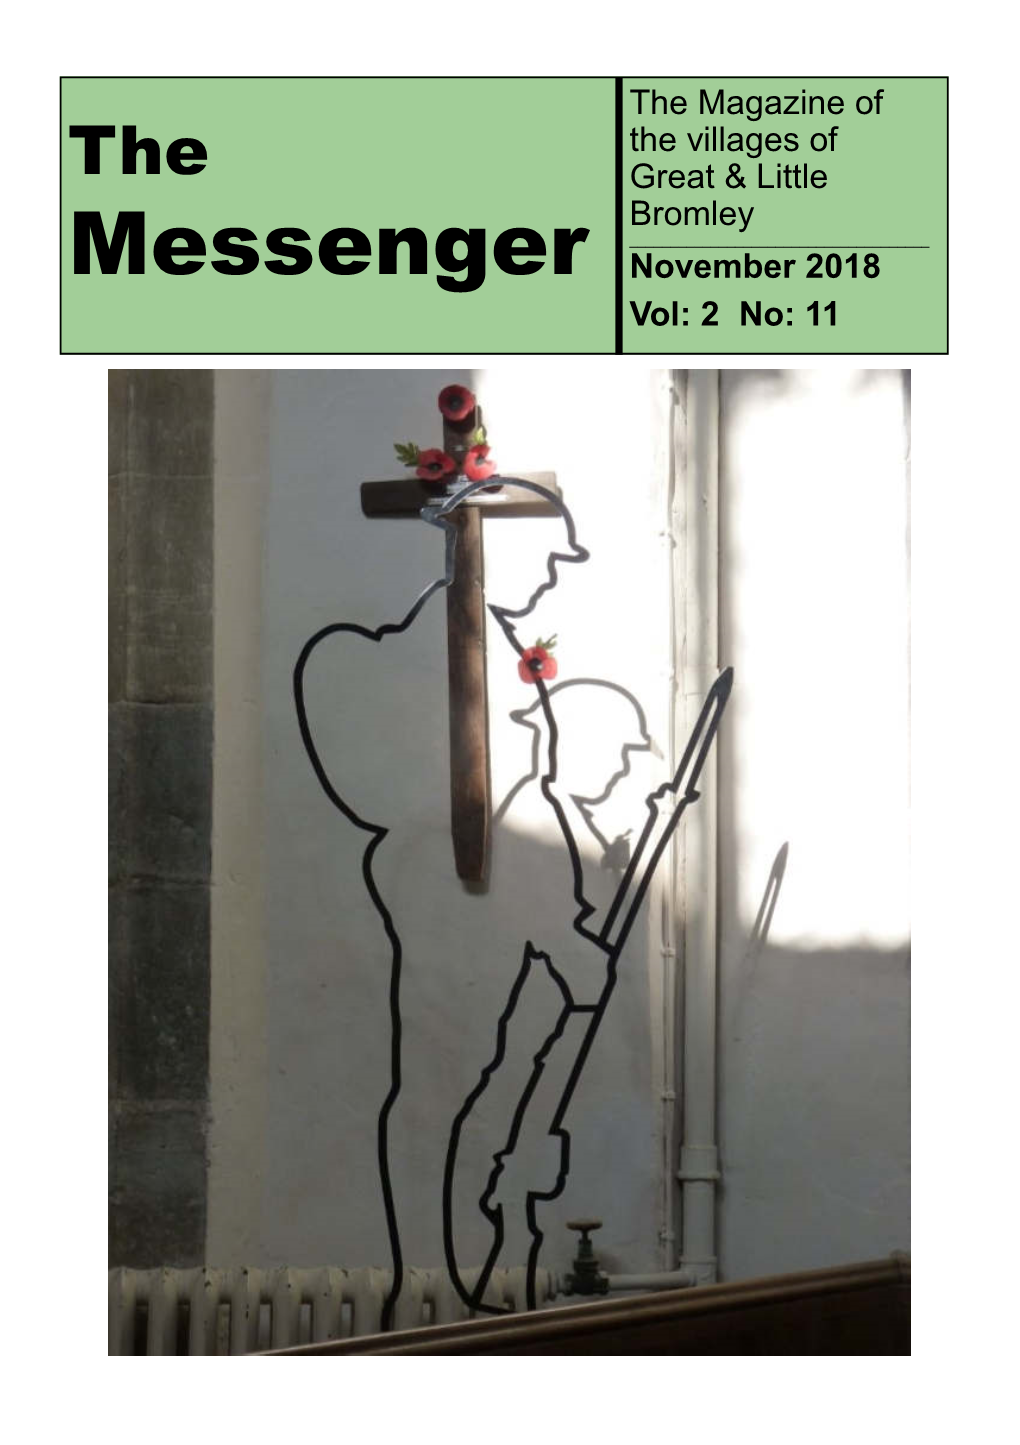 The Bromley Messenger November 2018